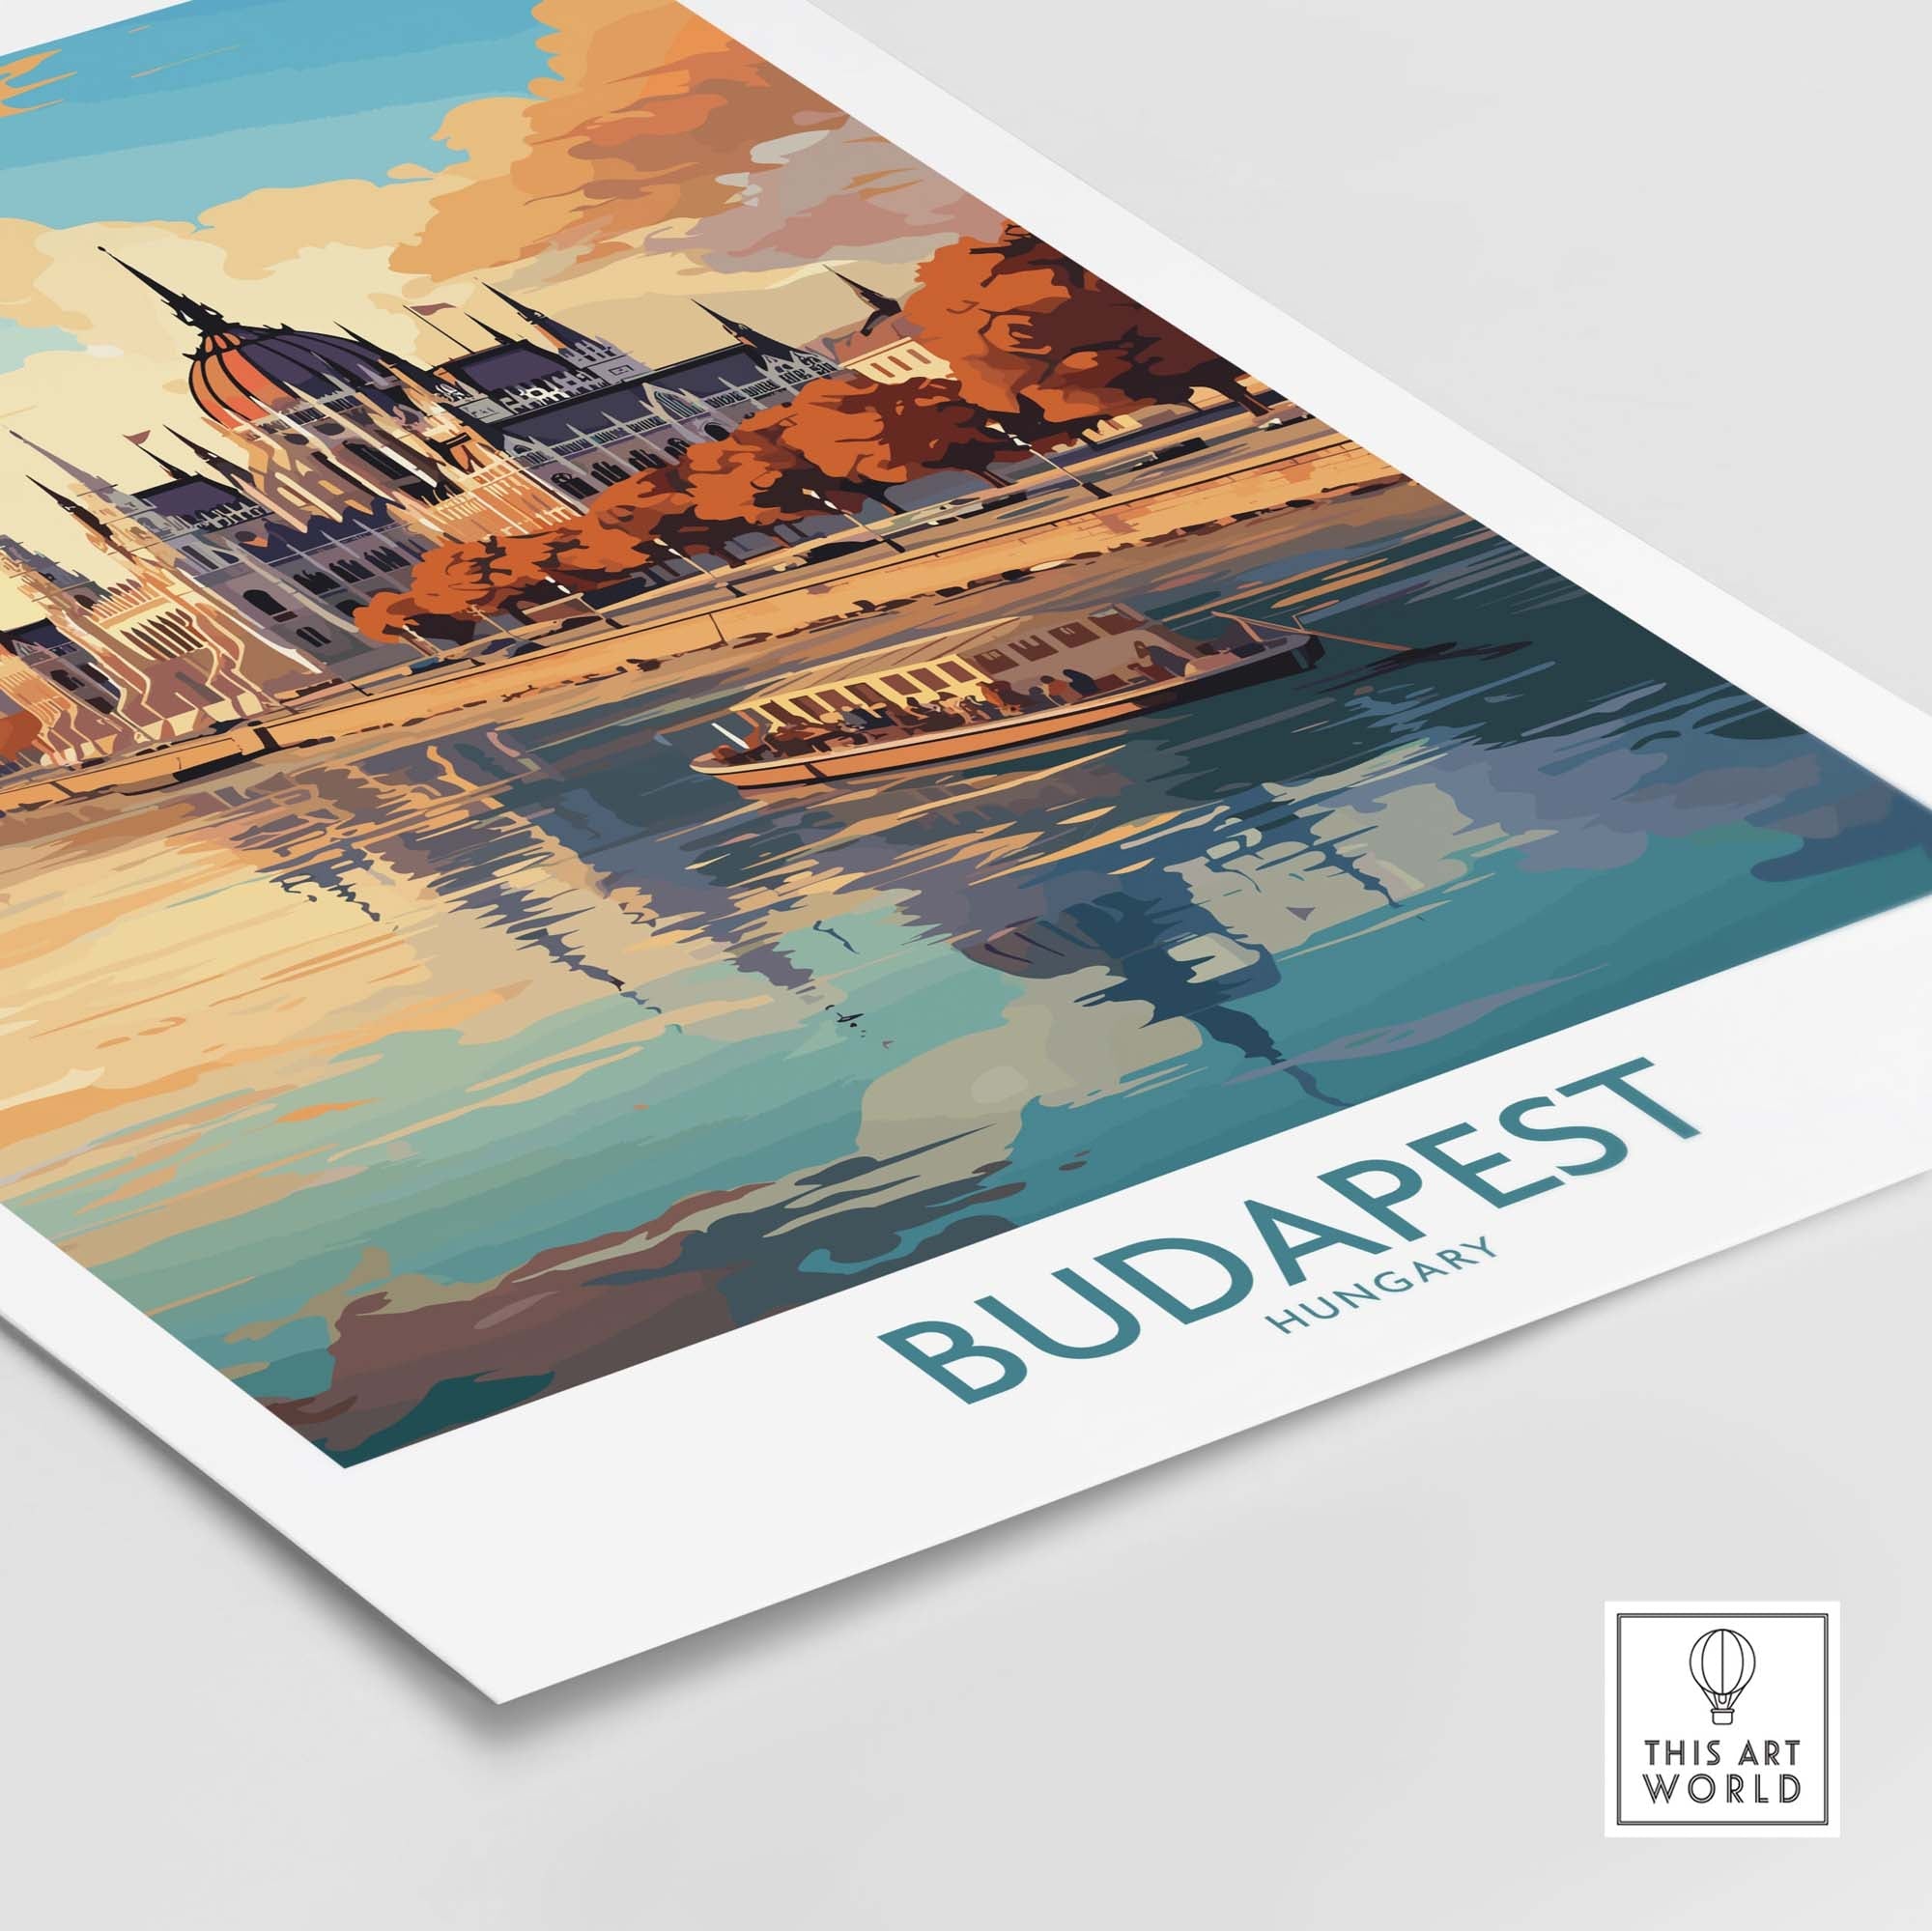 Budapest Art Print